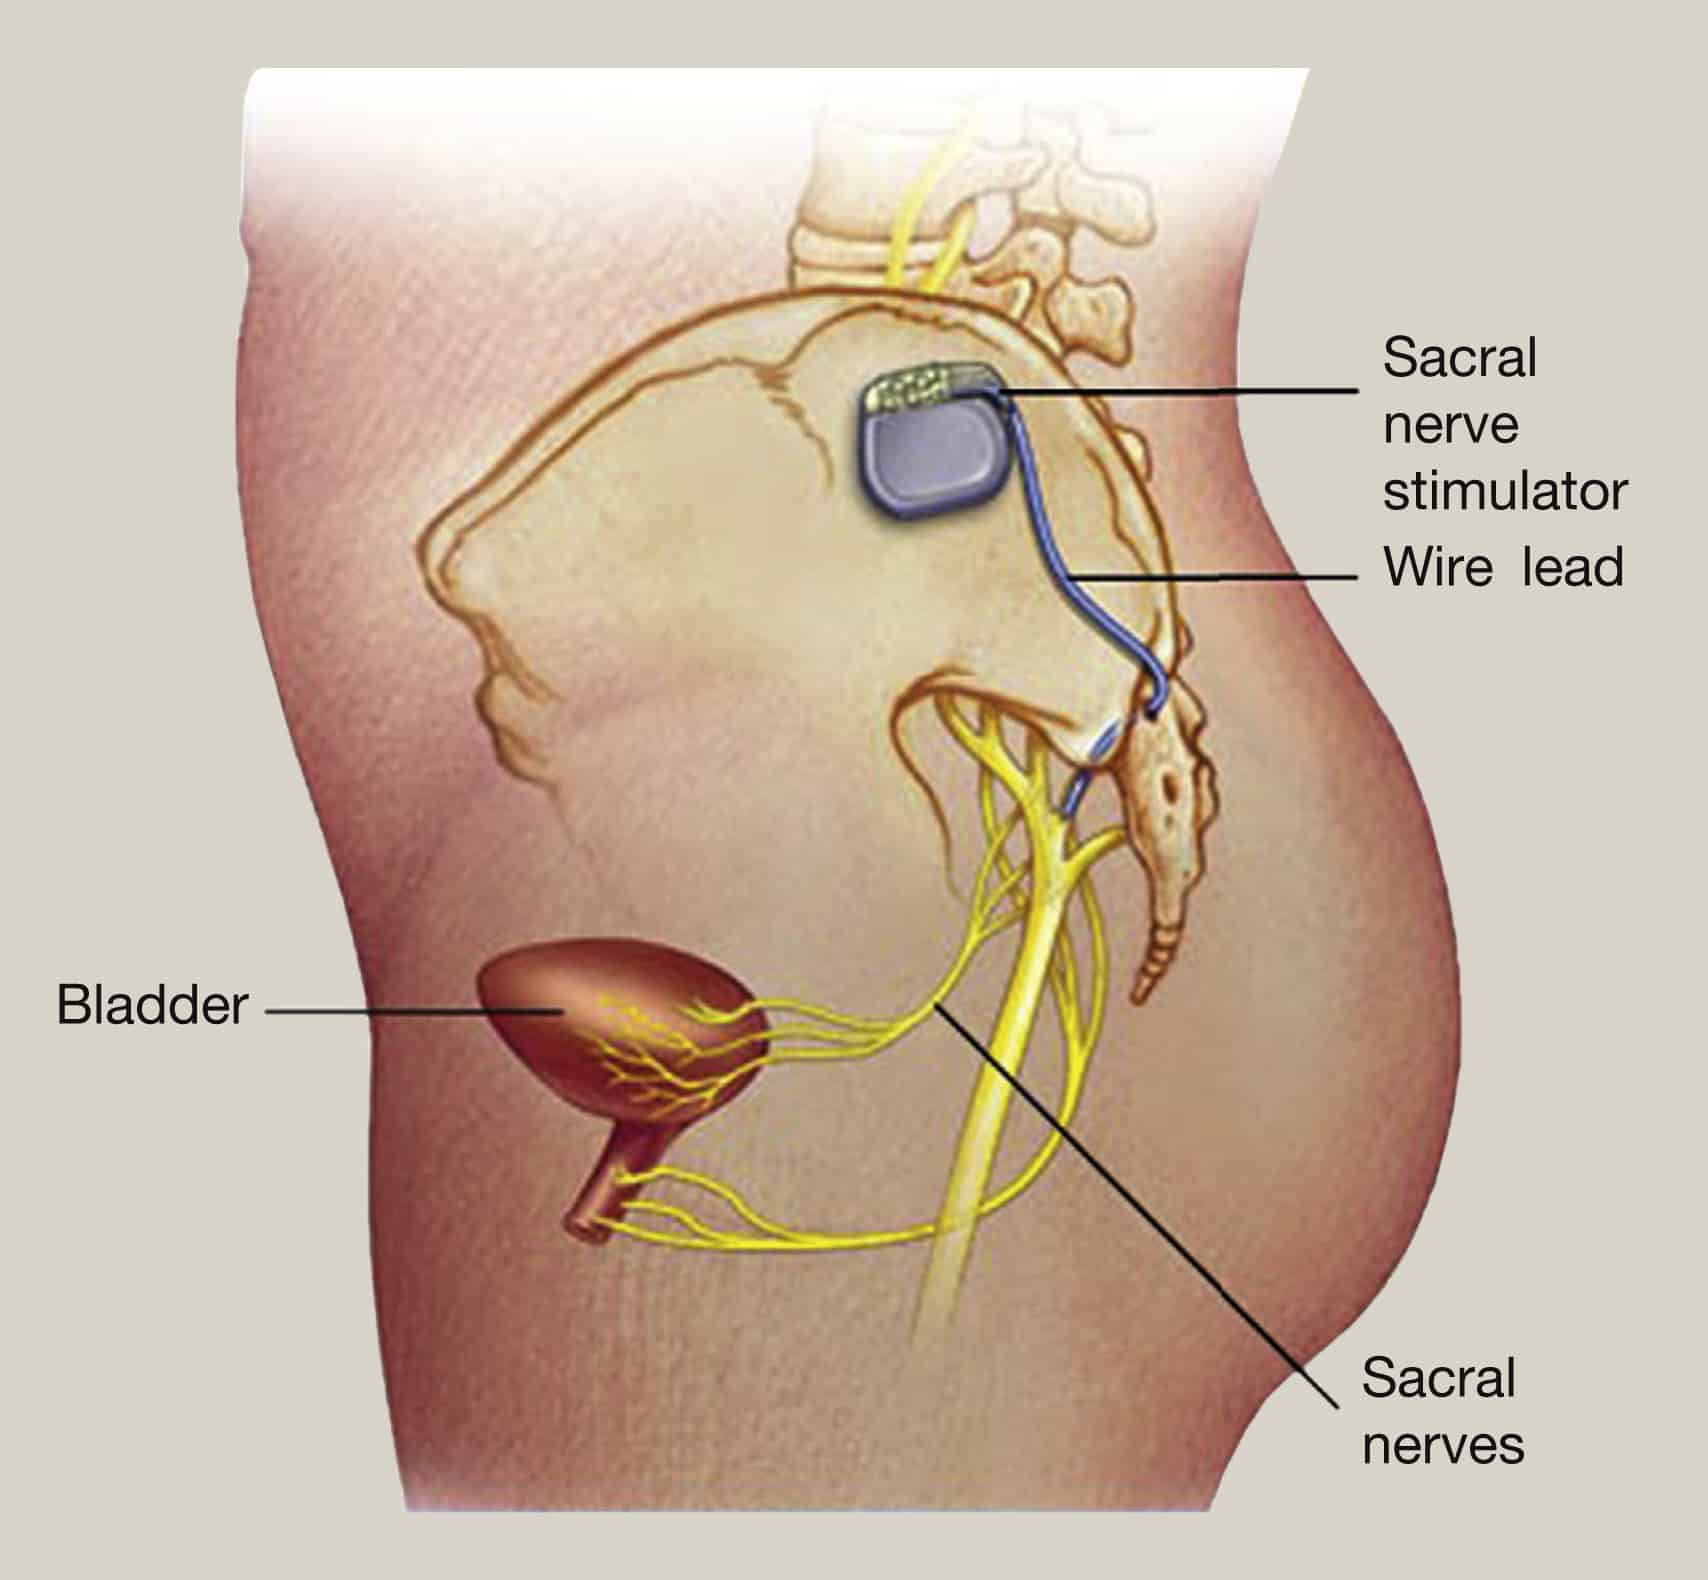 Modern management of overactive bladder syndrome